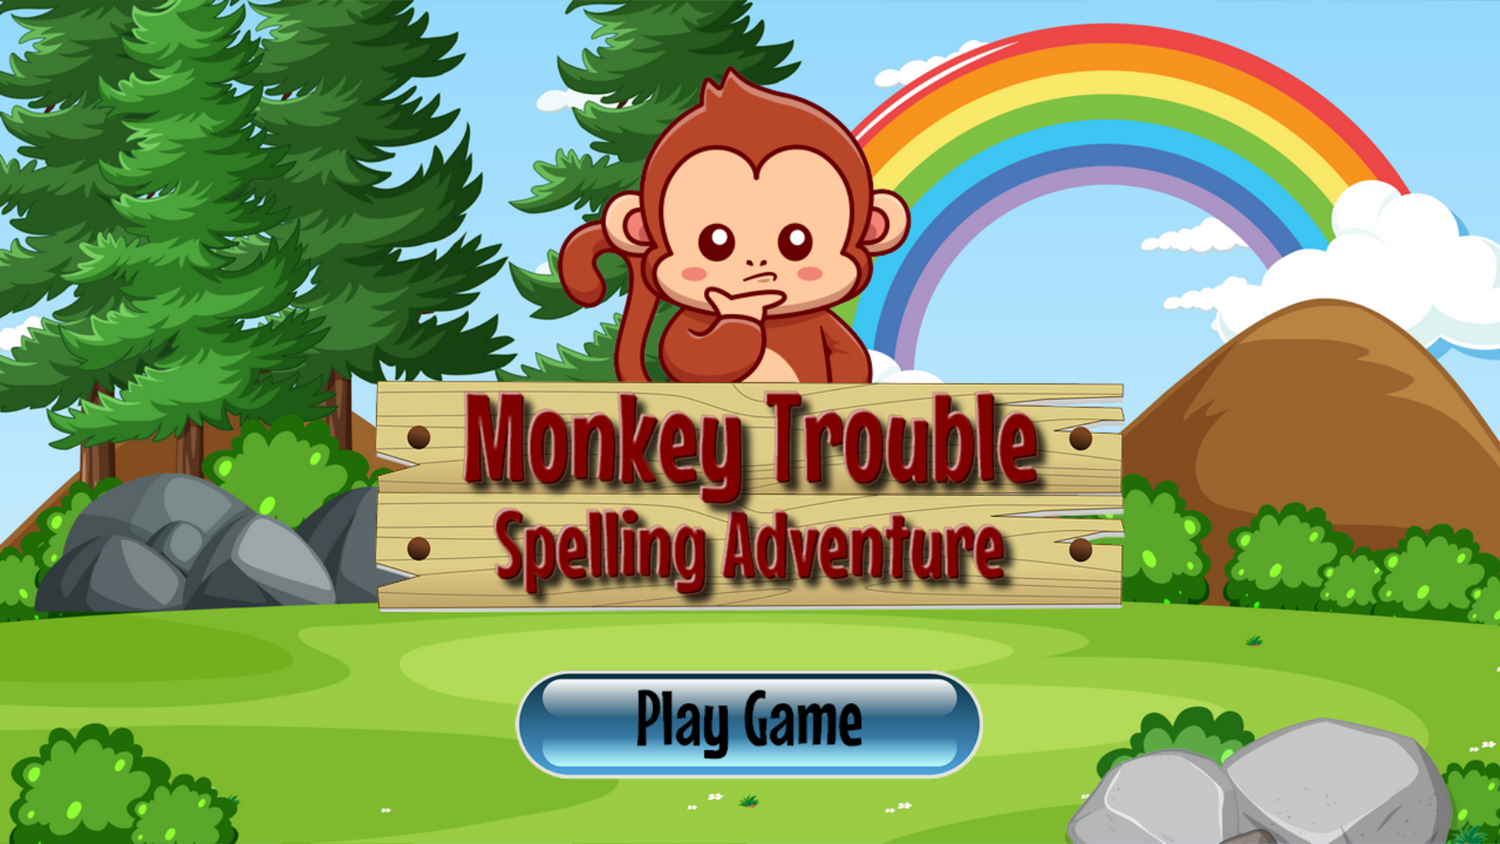 Monkey Trouble Spelling Adventure Game Welcome Screen Screenshot.